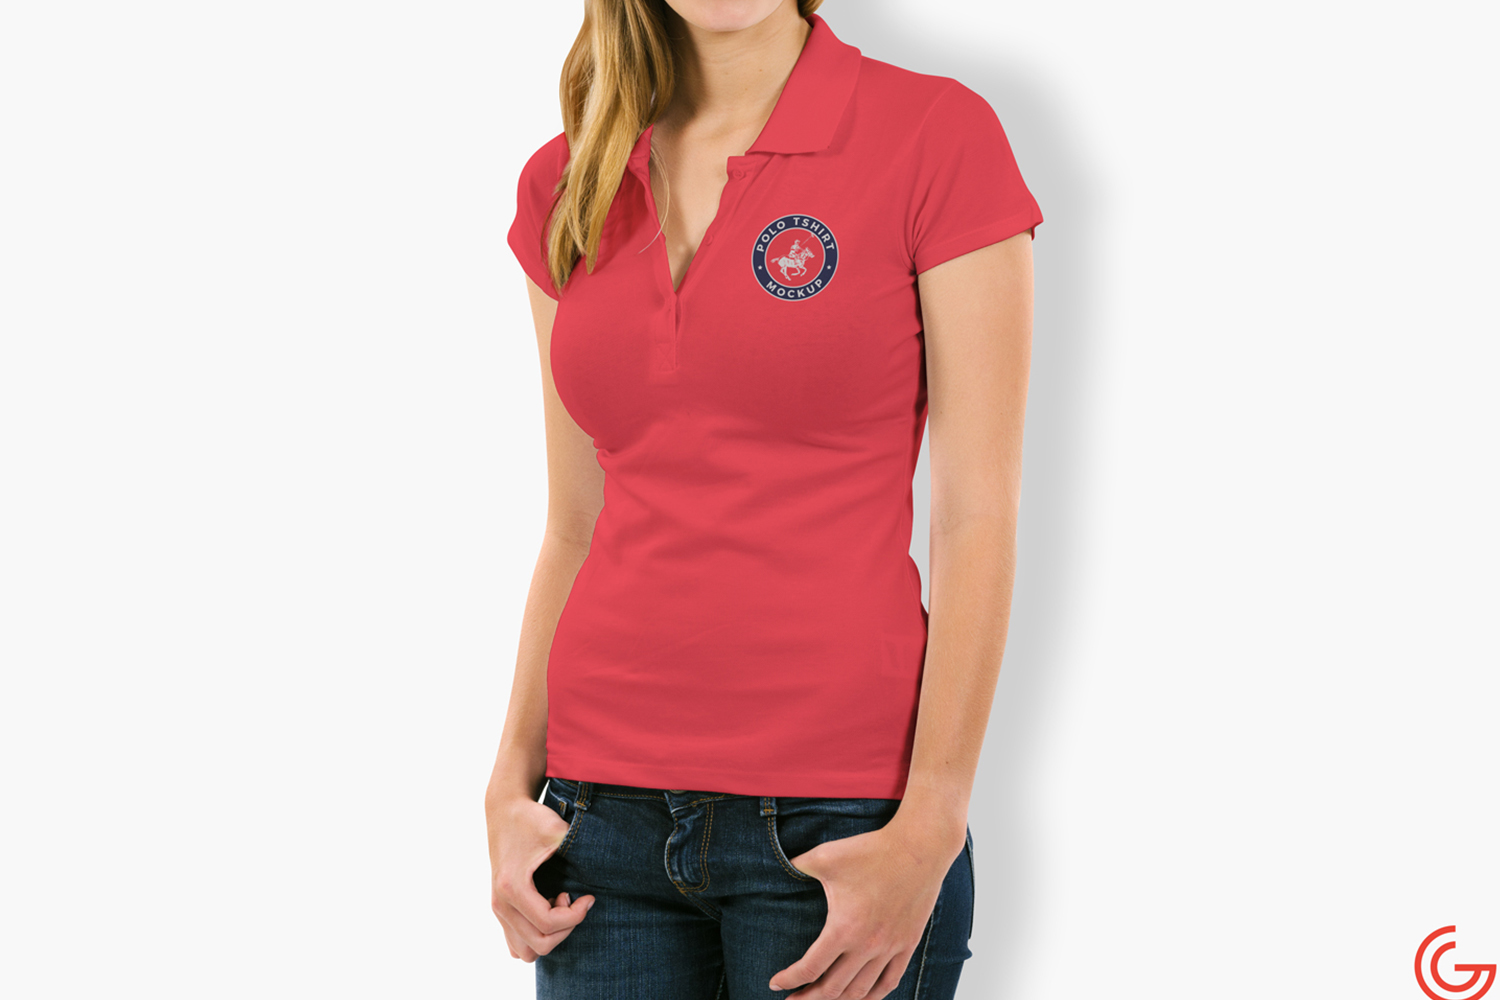 Woman Polo T-Shirt Mockup Free Download